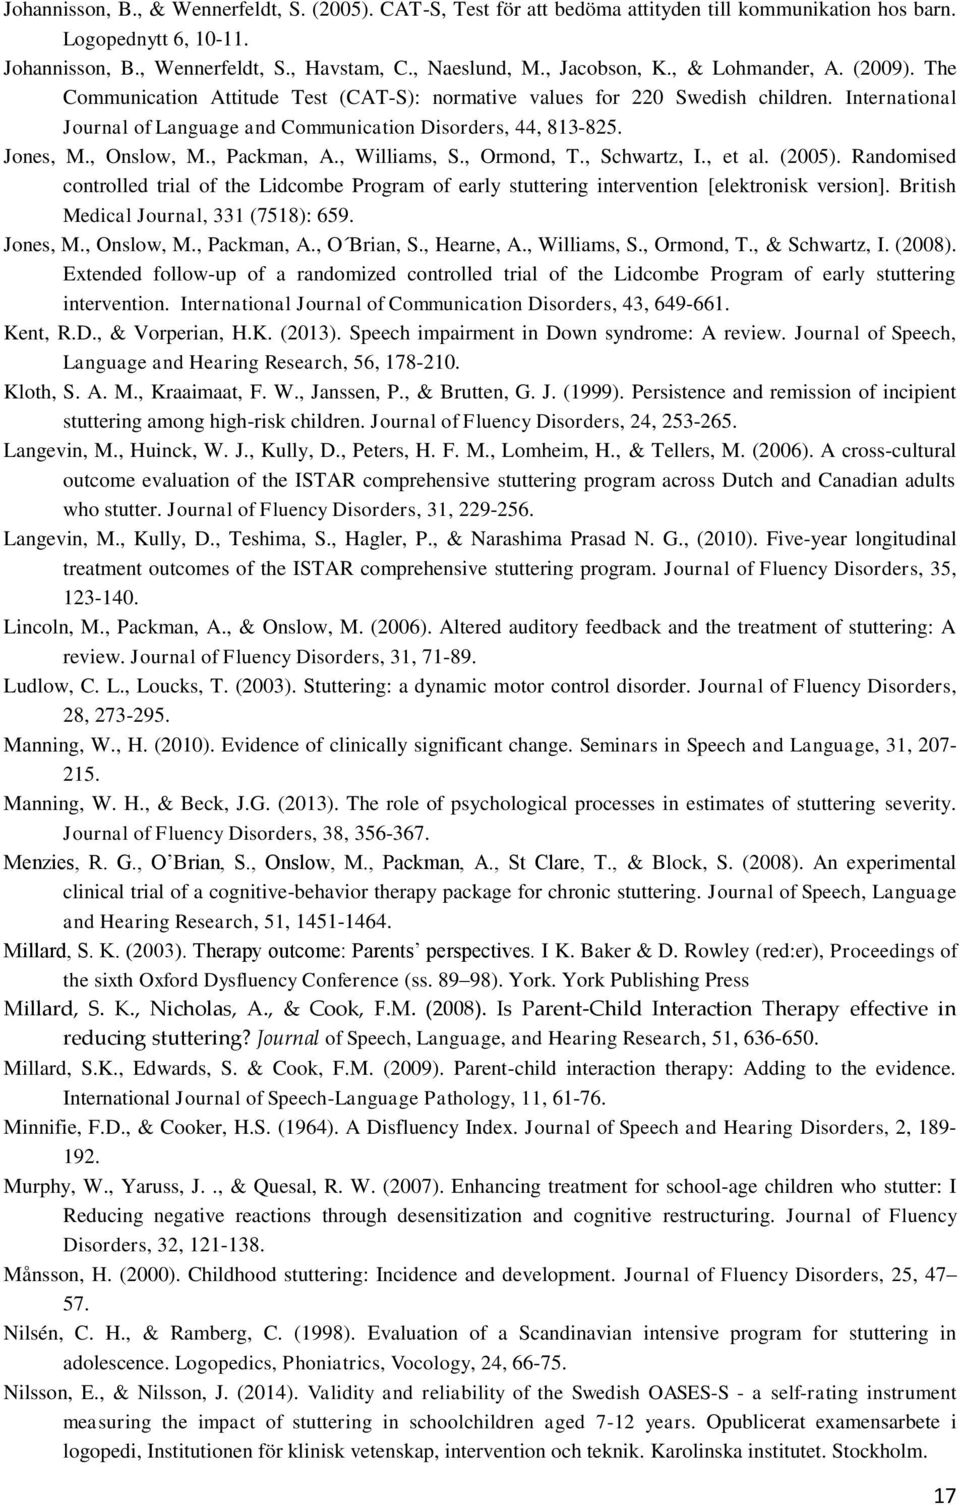 Jones, M., Onslow, M., Packman, A., Williams, S., Ormond, T., Schwartz, I., et al. (2005). Randomised controlled trial of the Lidcombe Program of early stuttering intervention [elektronisk version].